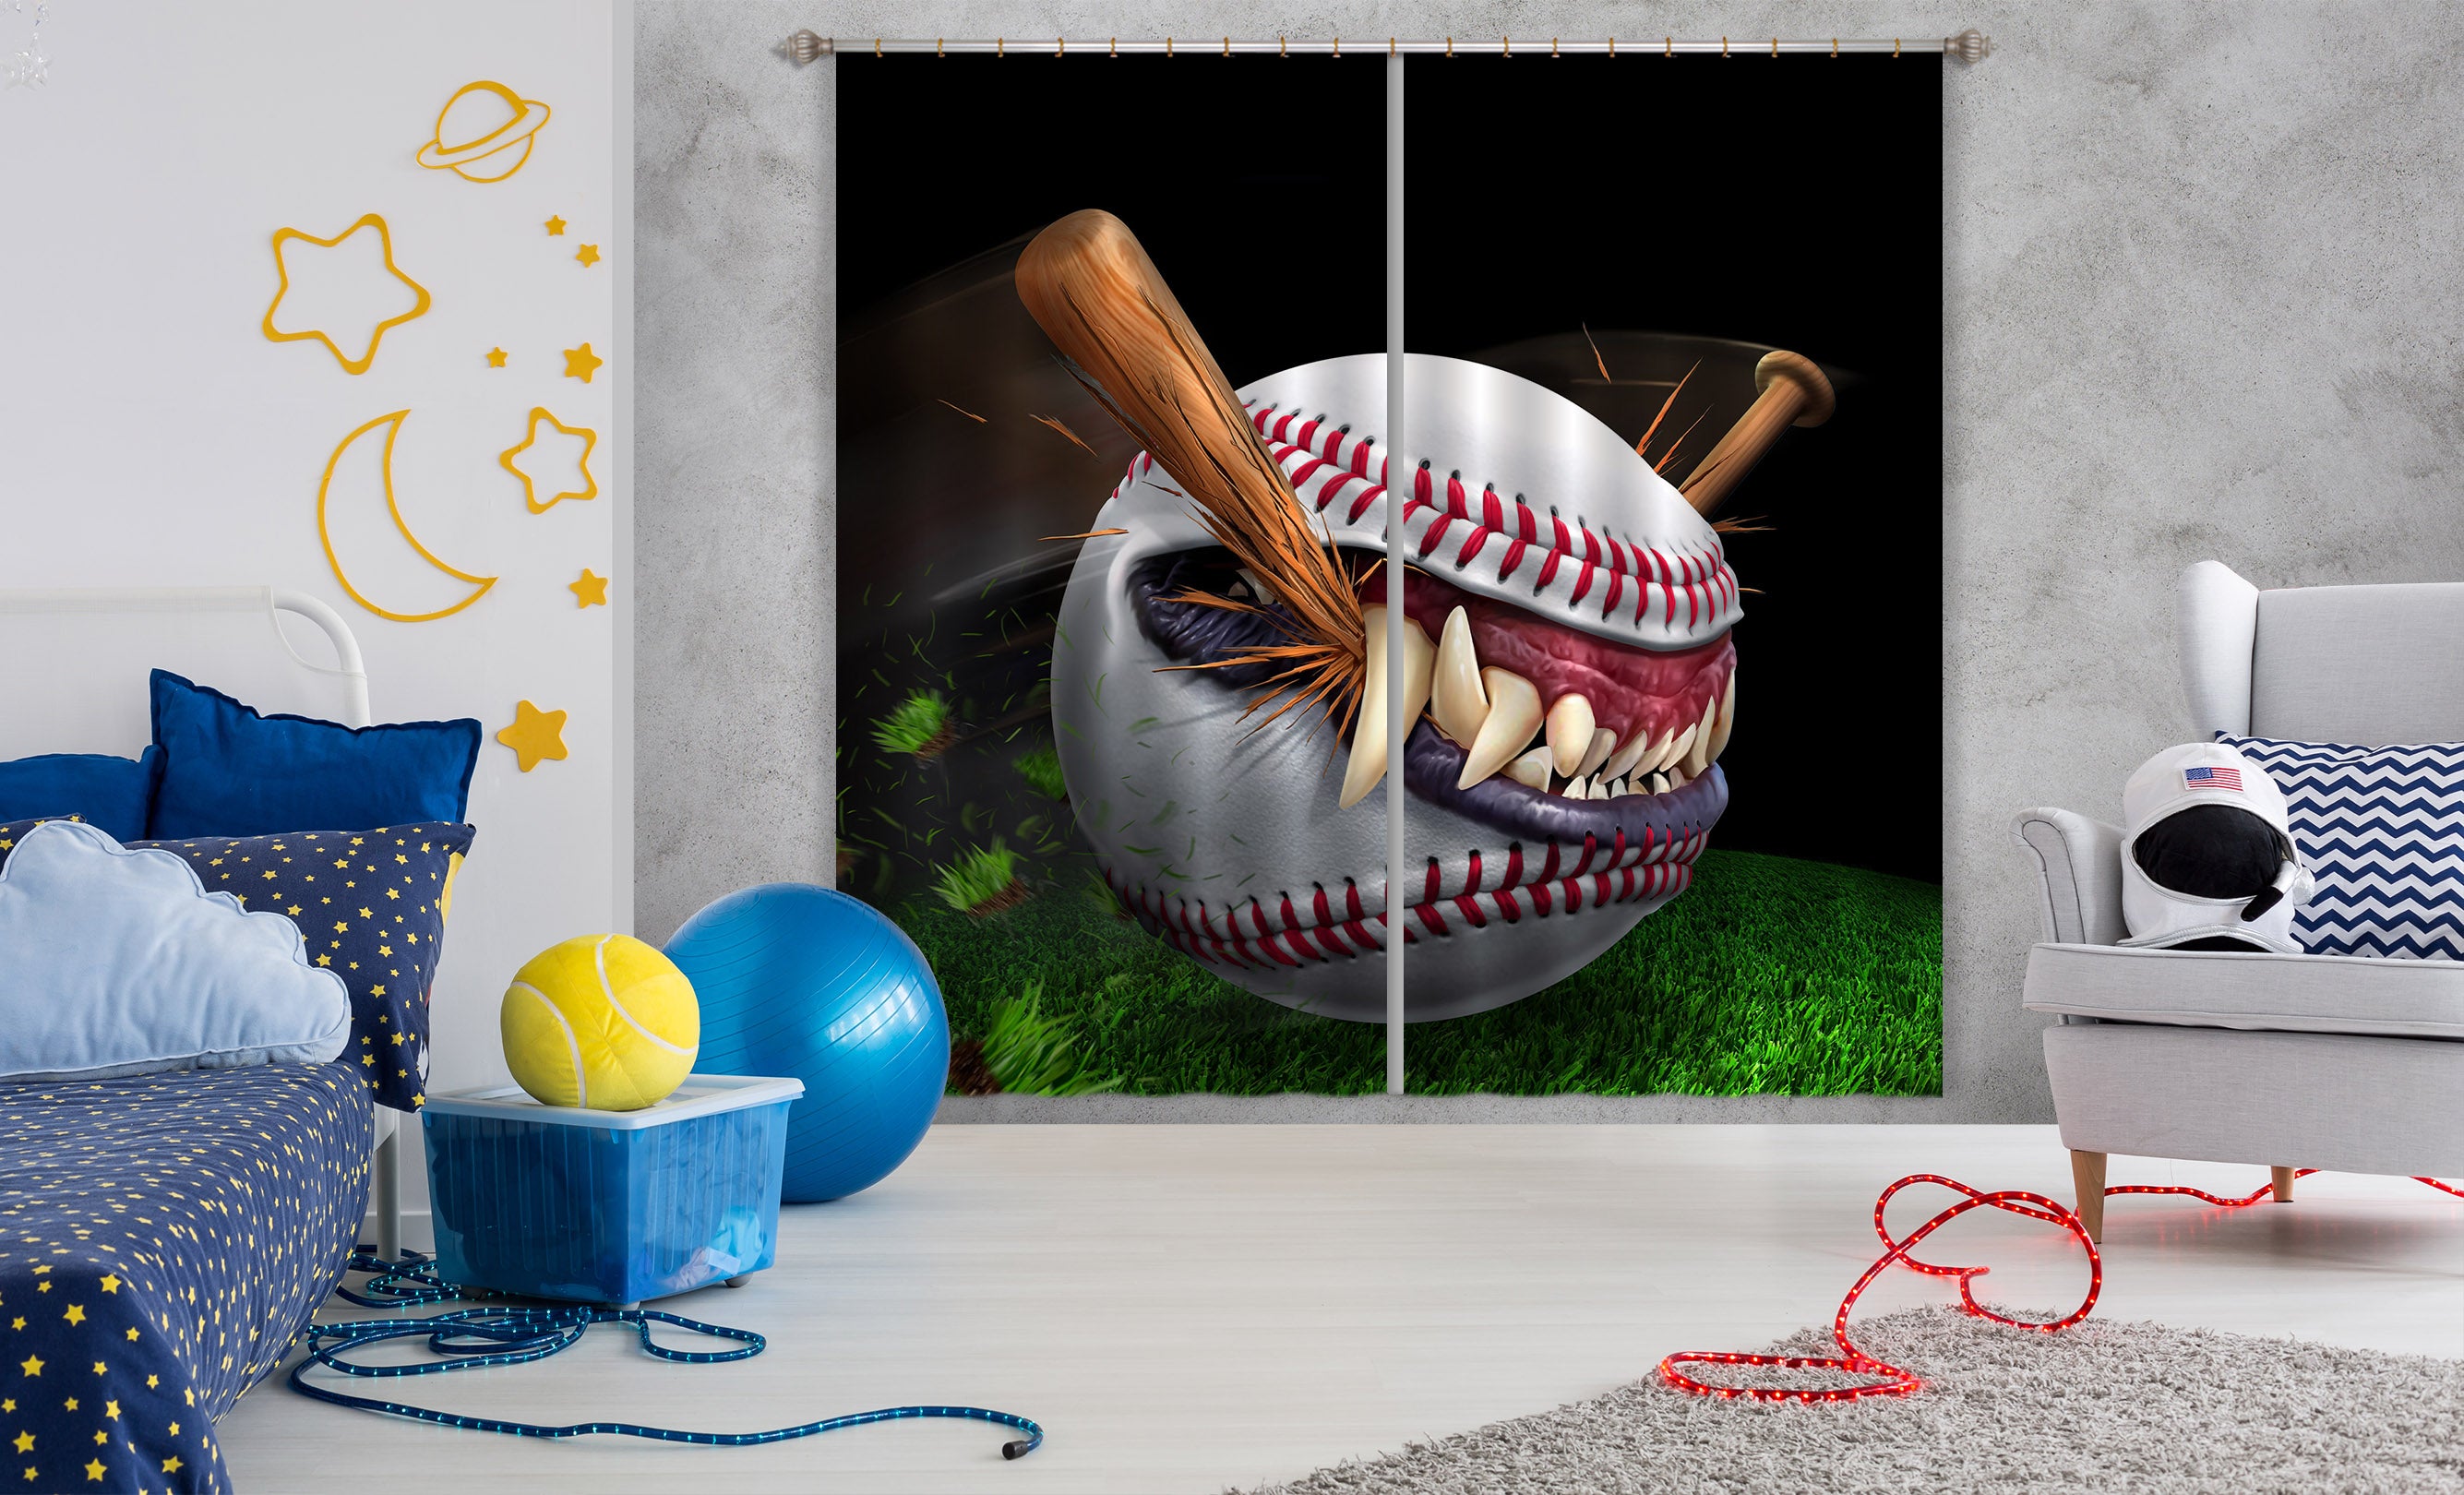 3D Teeth Baseball 5050 Tom Wood Curtain Curtains Drapes